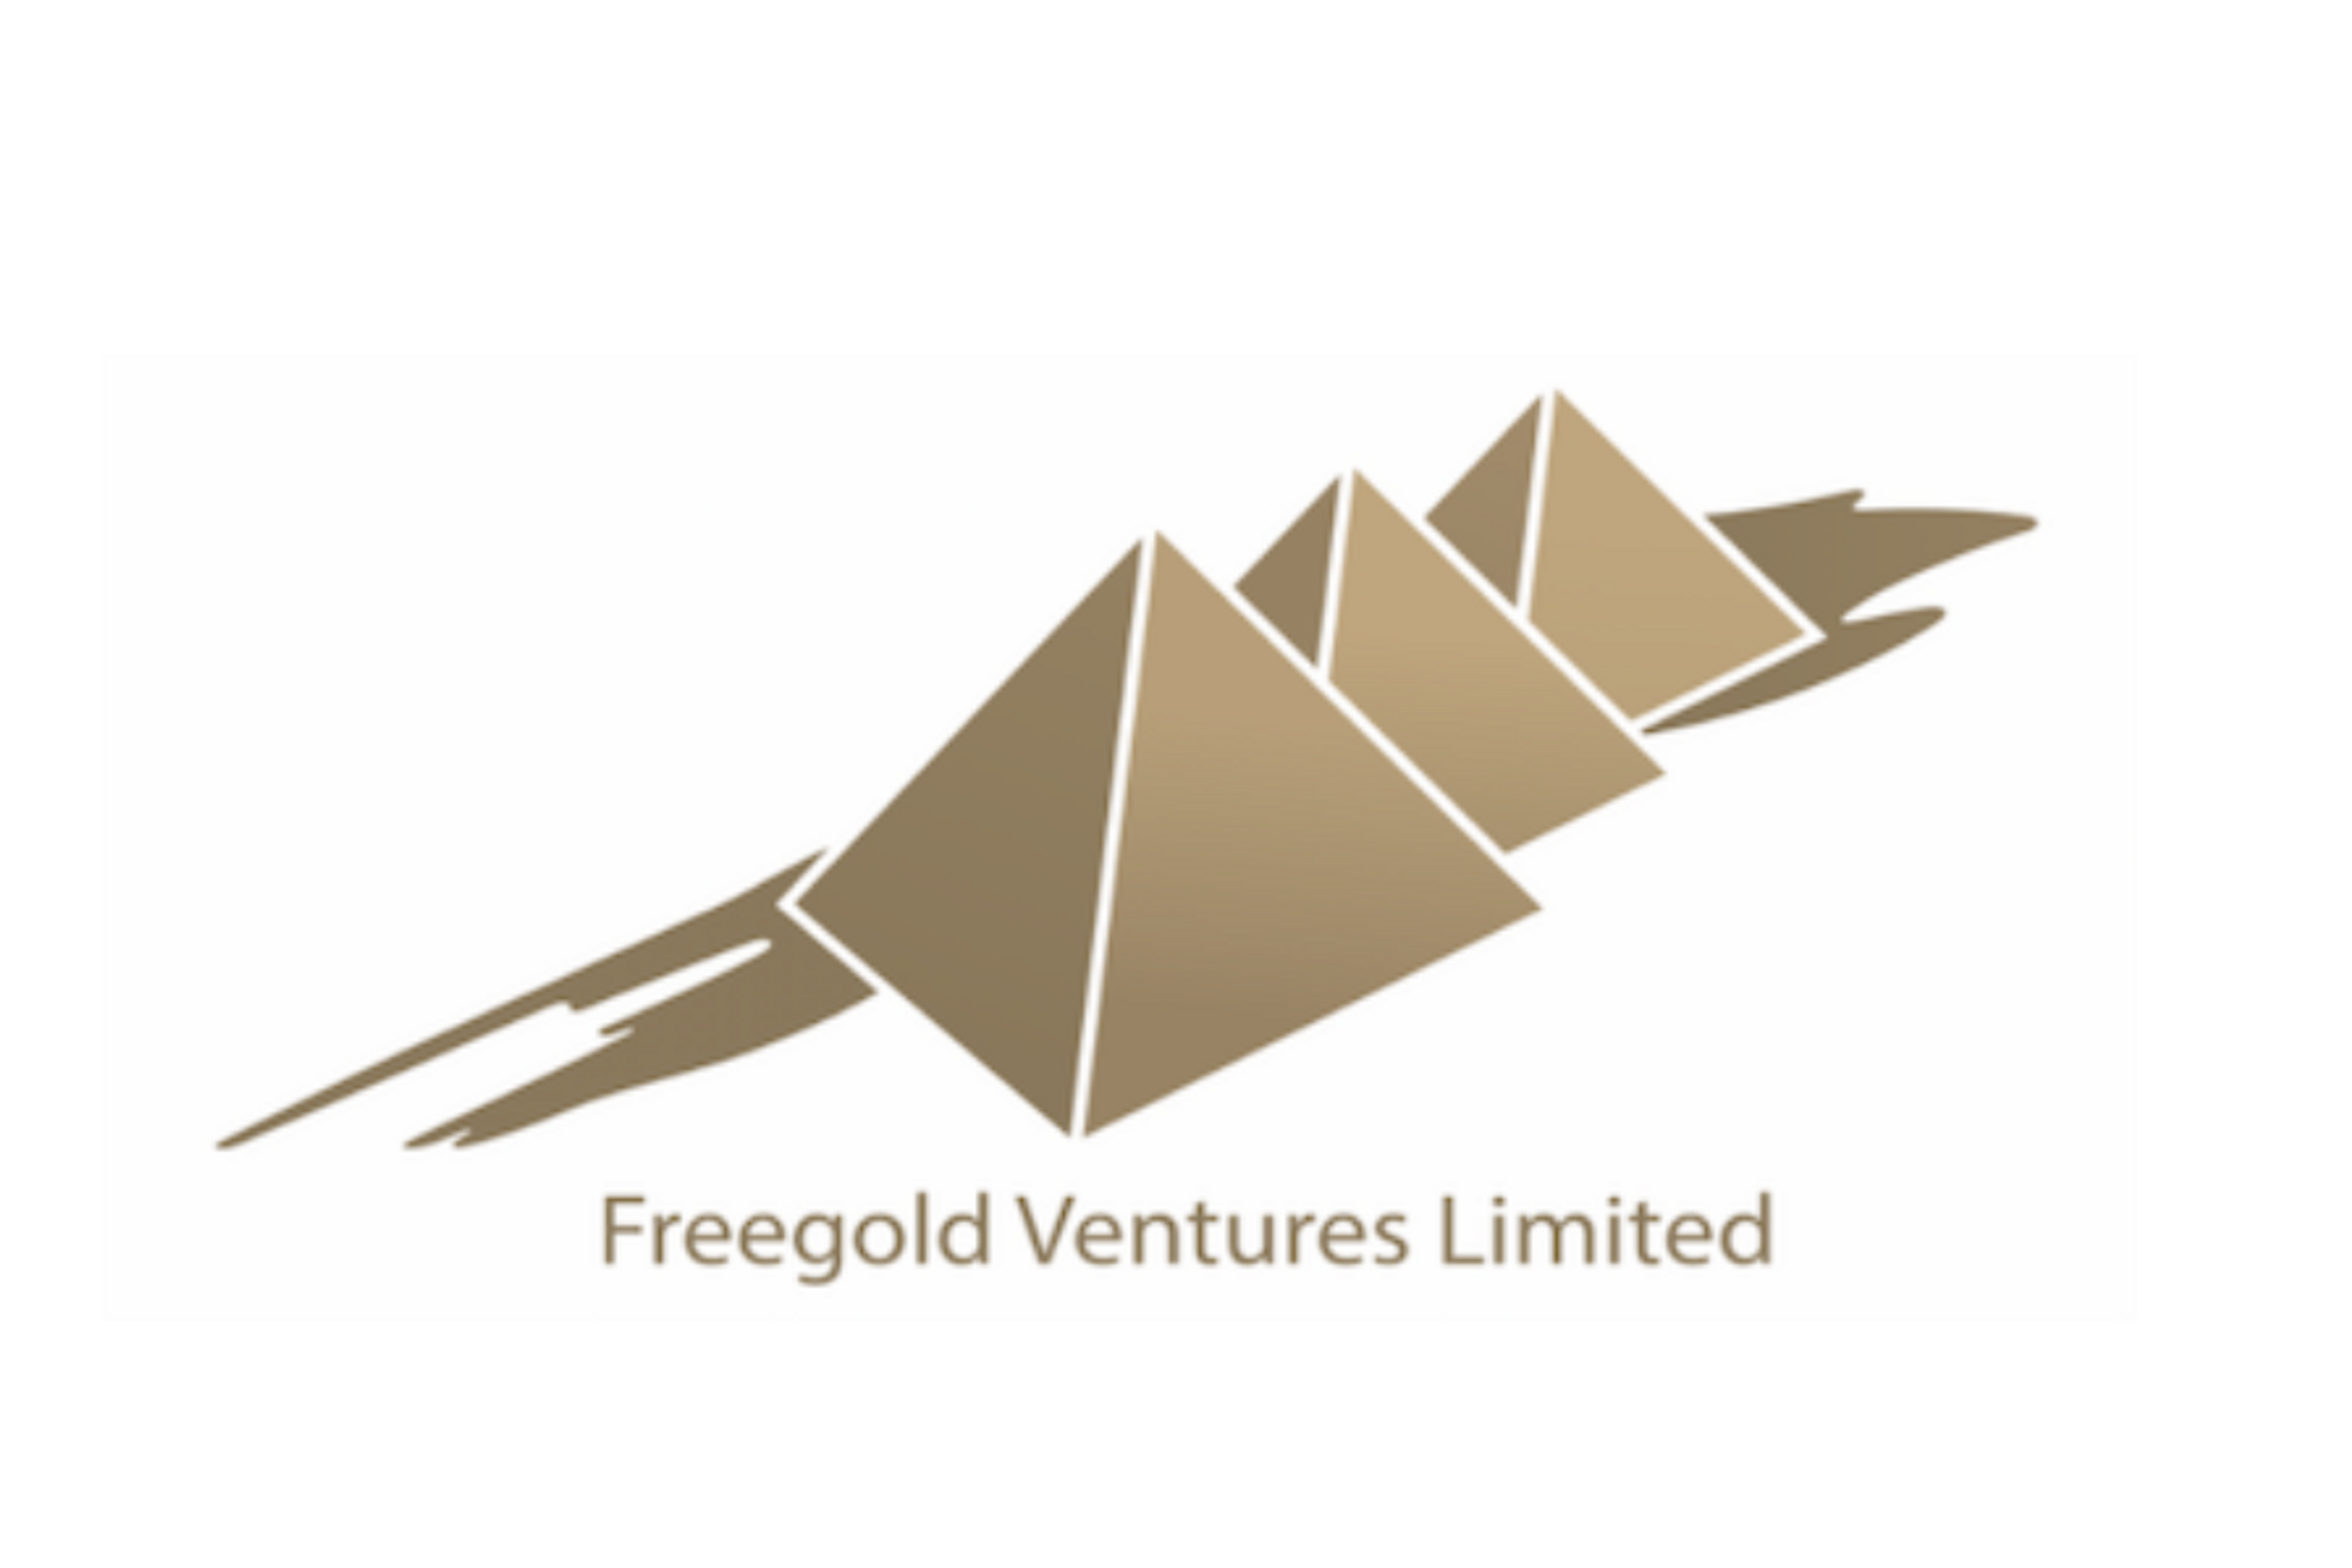 Freegold venture logo